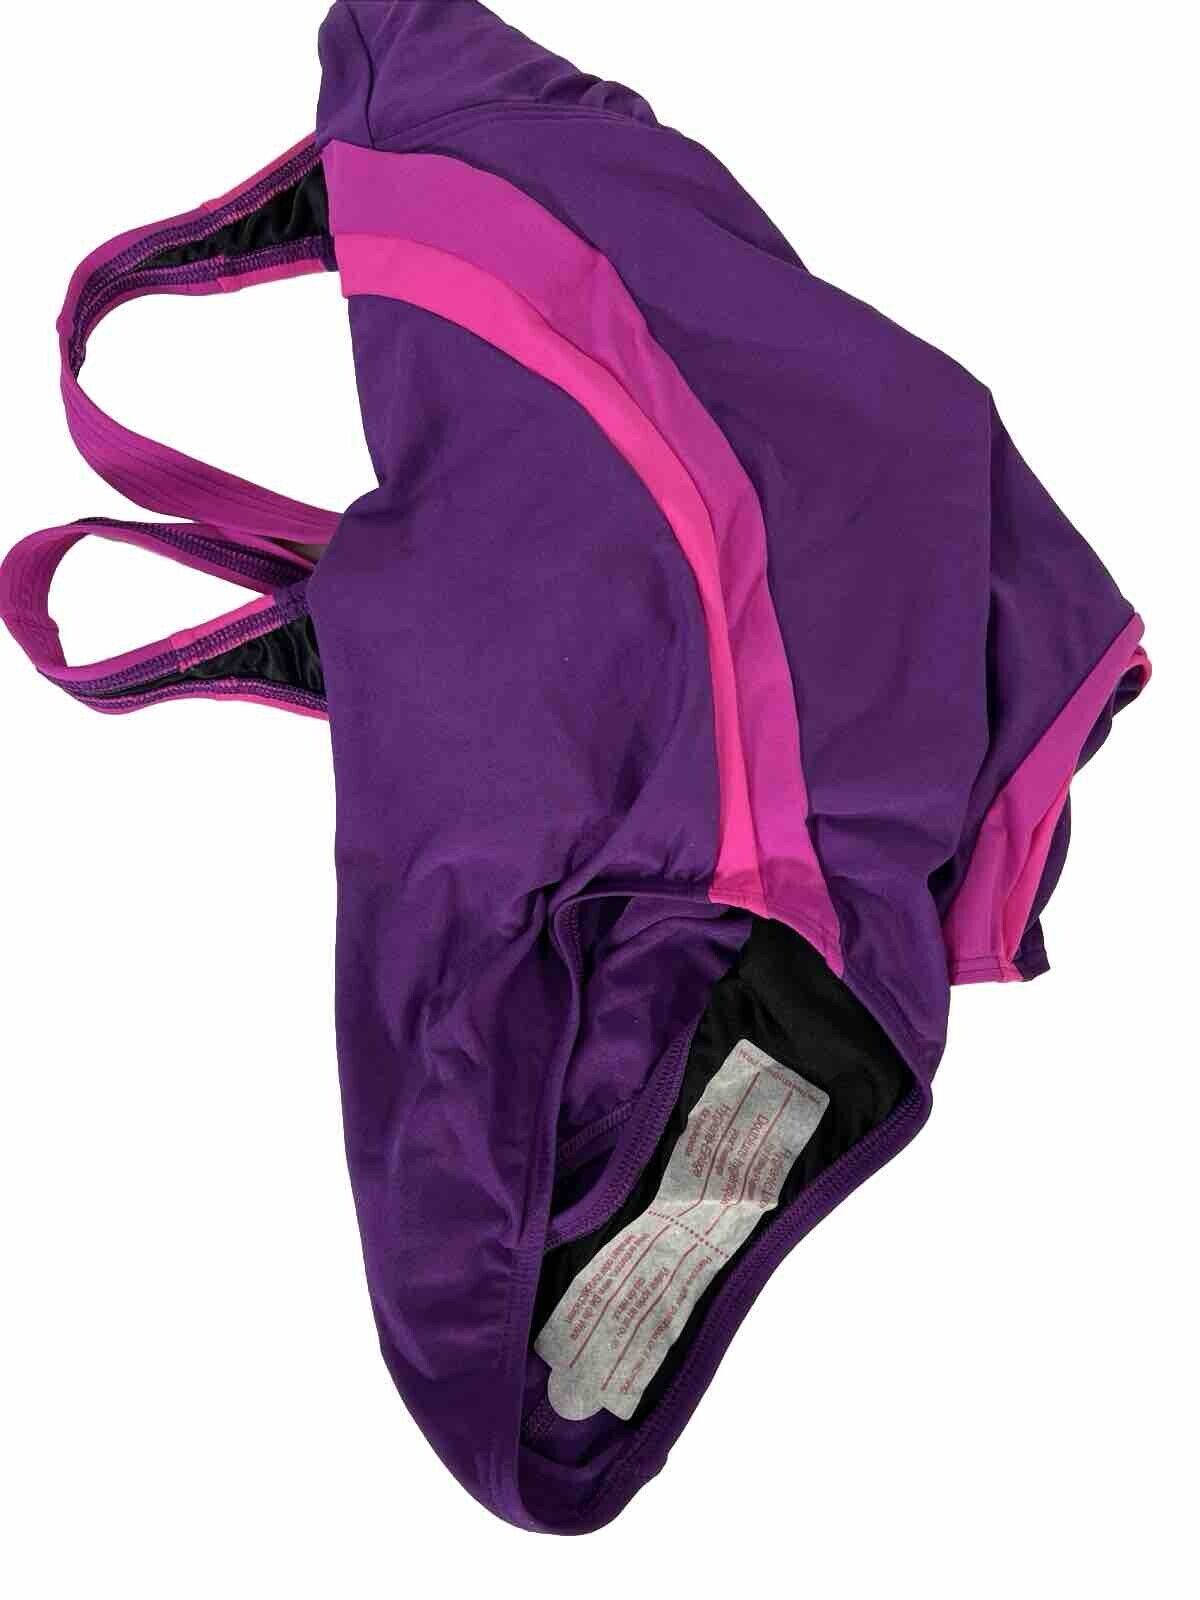 NEW Lands' End Women's Purple Padded One Piece Swimsuit - 8L